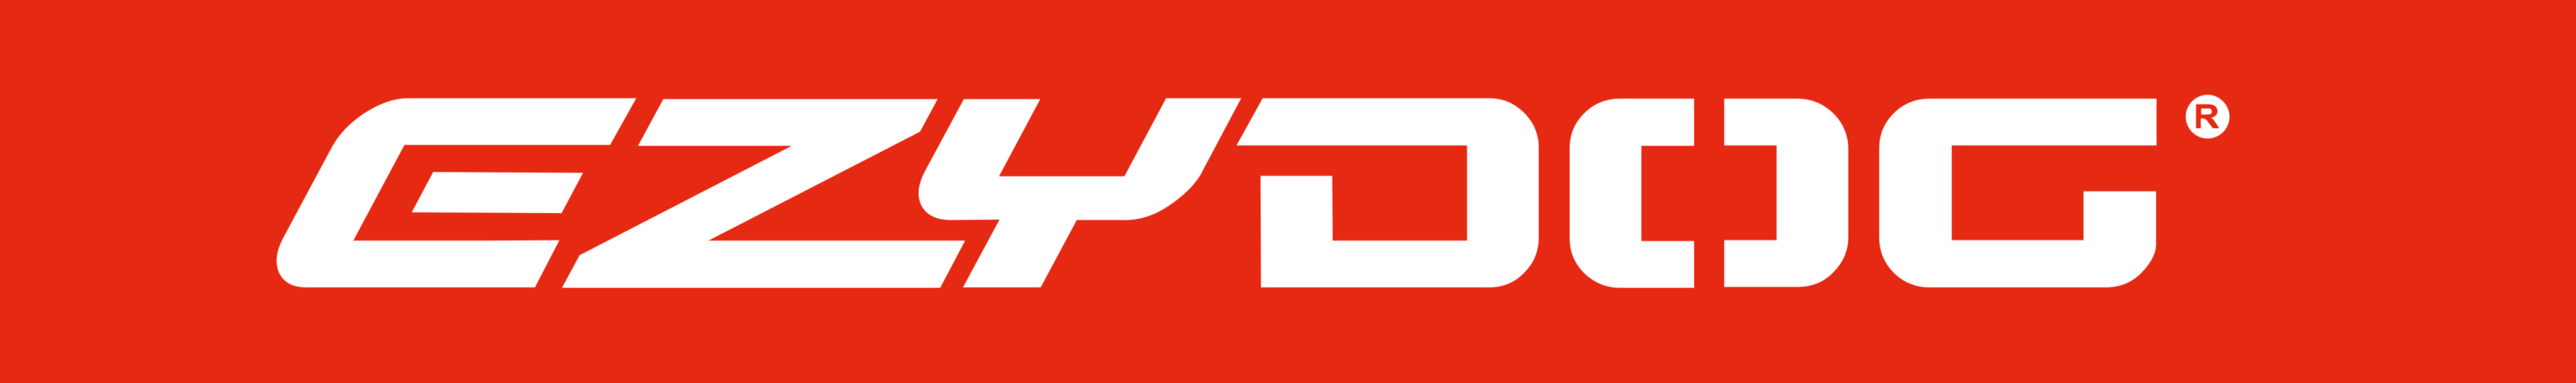 Ezydog Logo